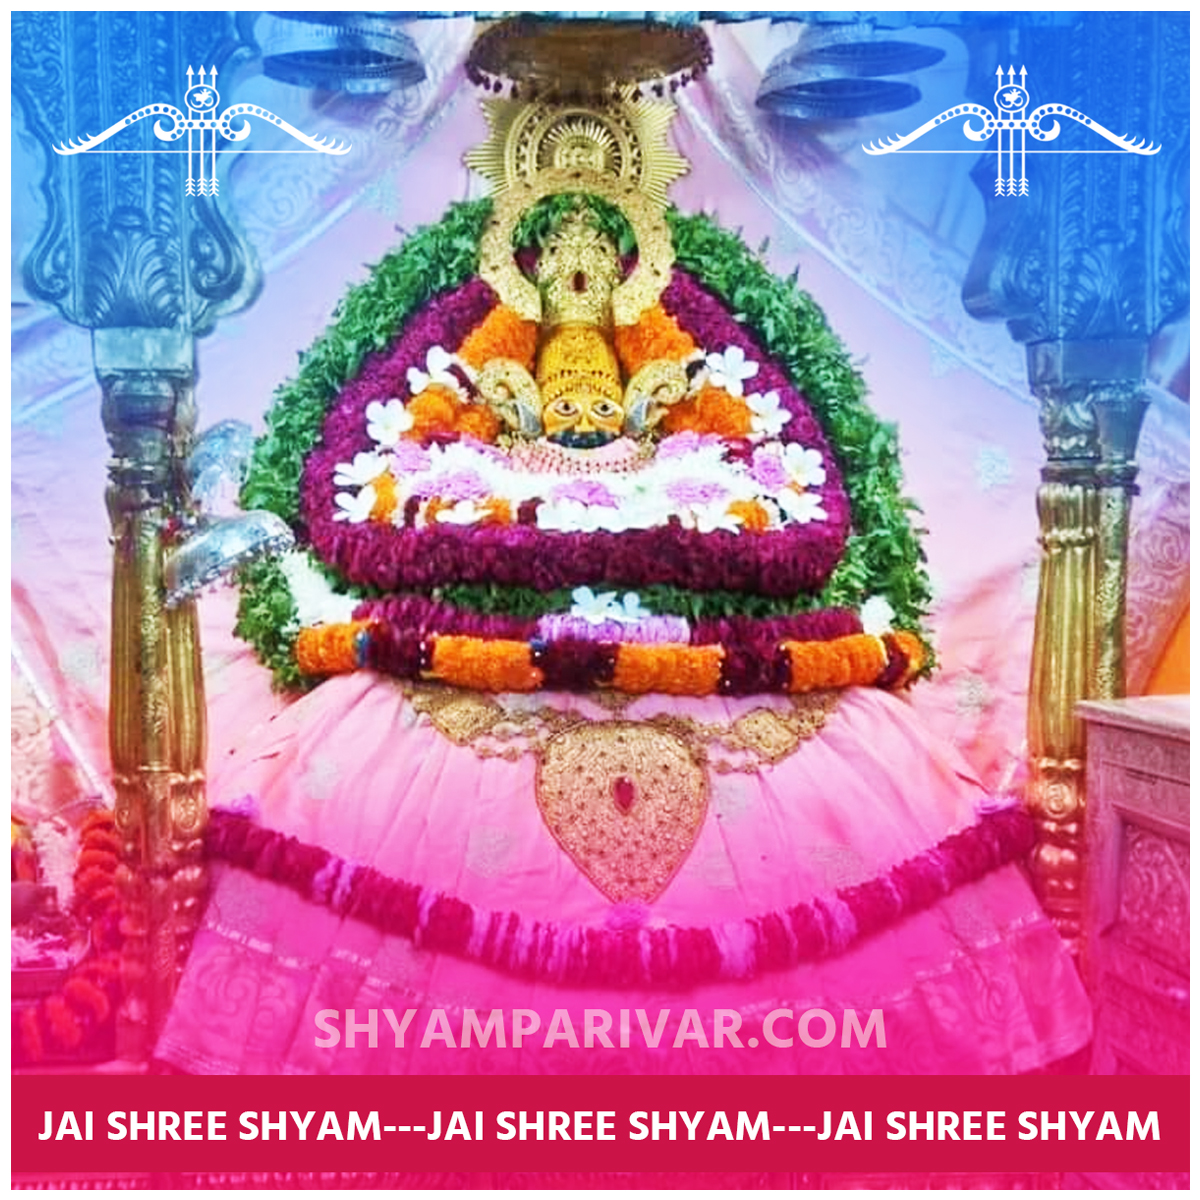 Khatu shyam ji darshan LIve today photos, images and wallpaper